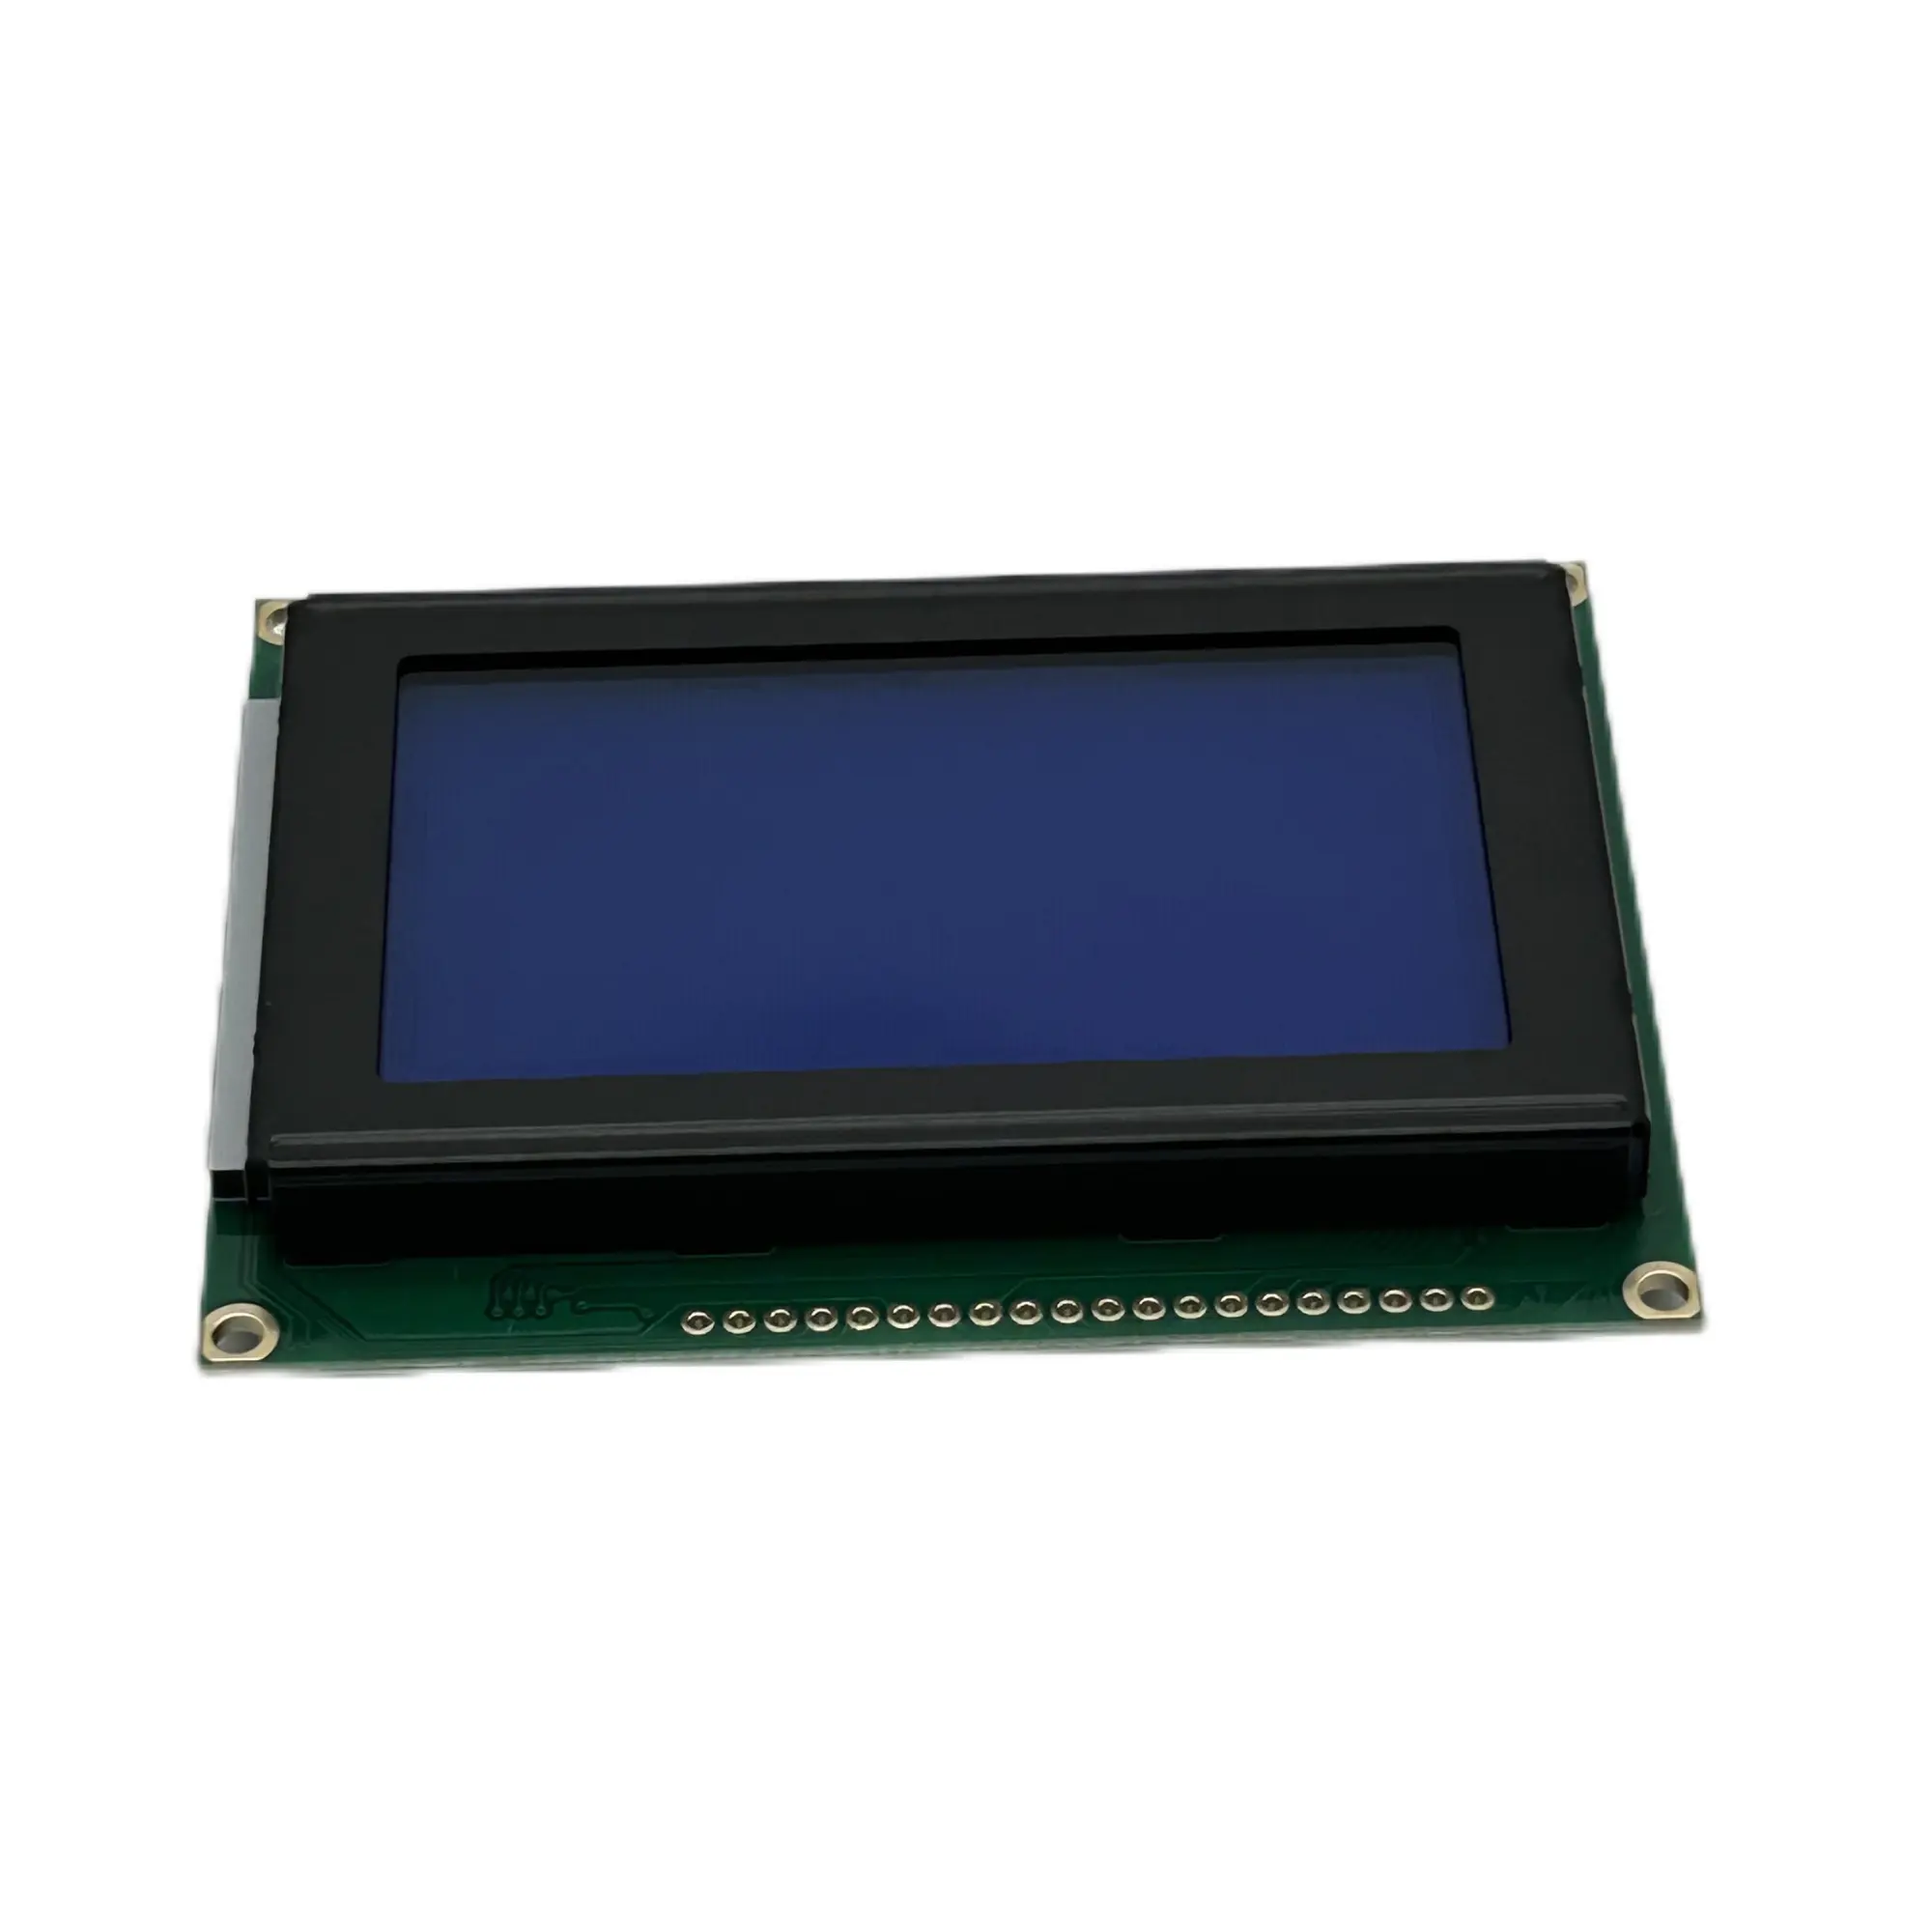 Modulo schermo LCD 12864J-3 128*64 con controller ks0108 5V/3.3V